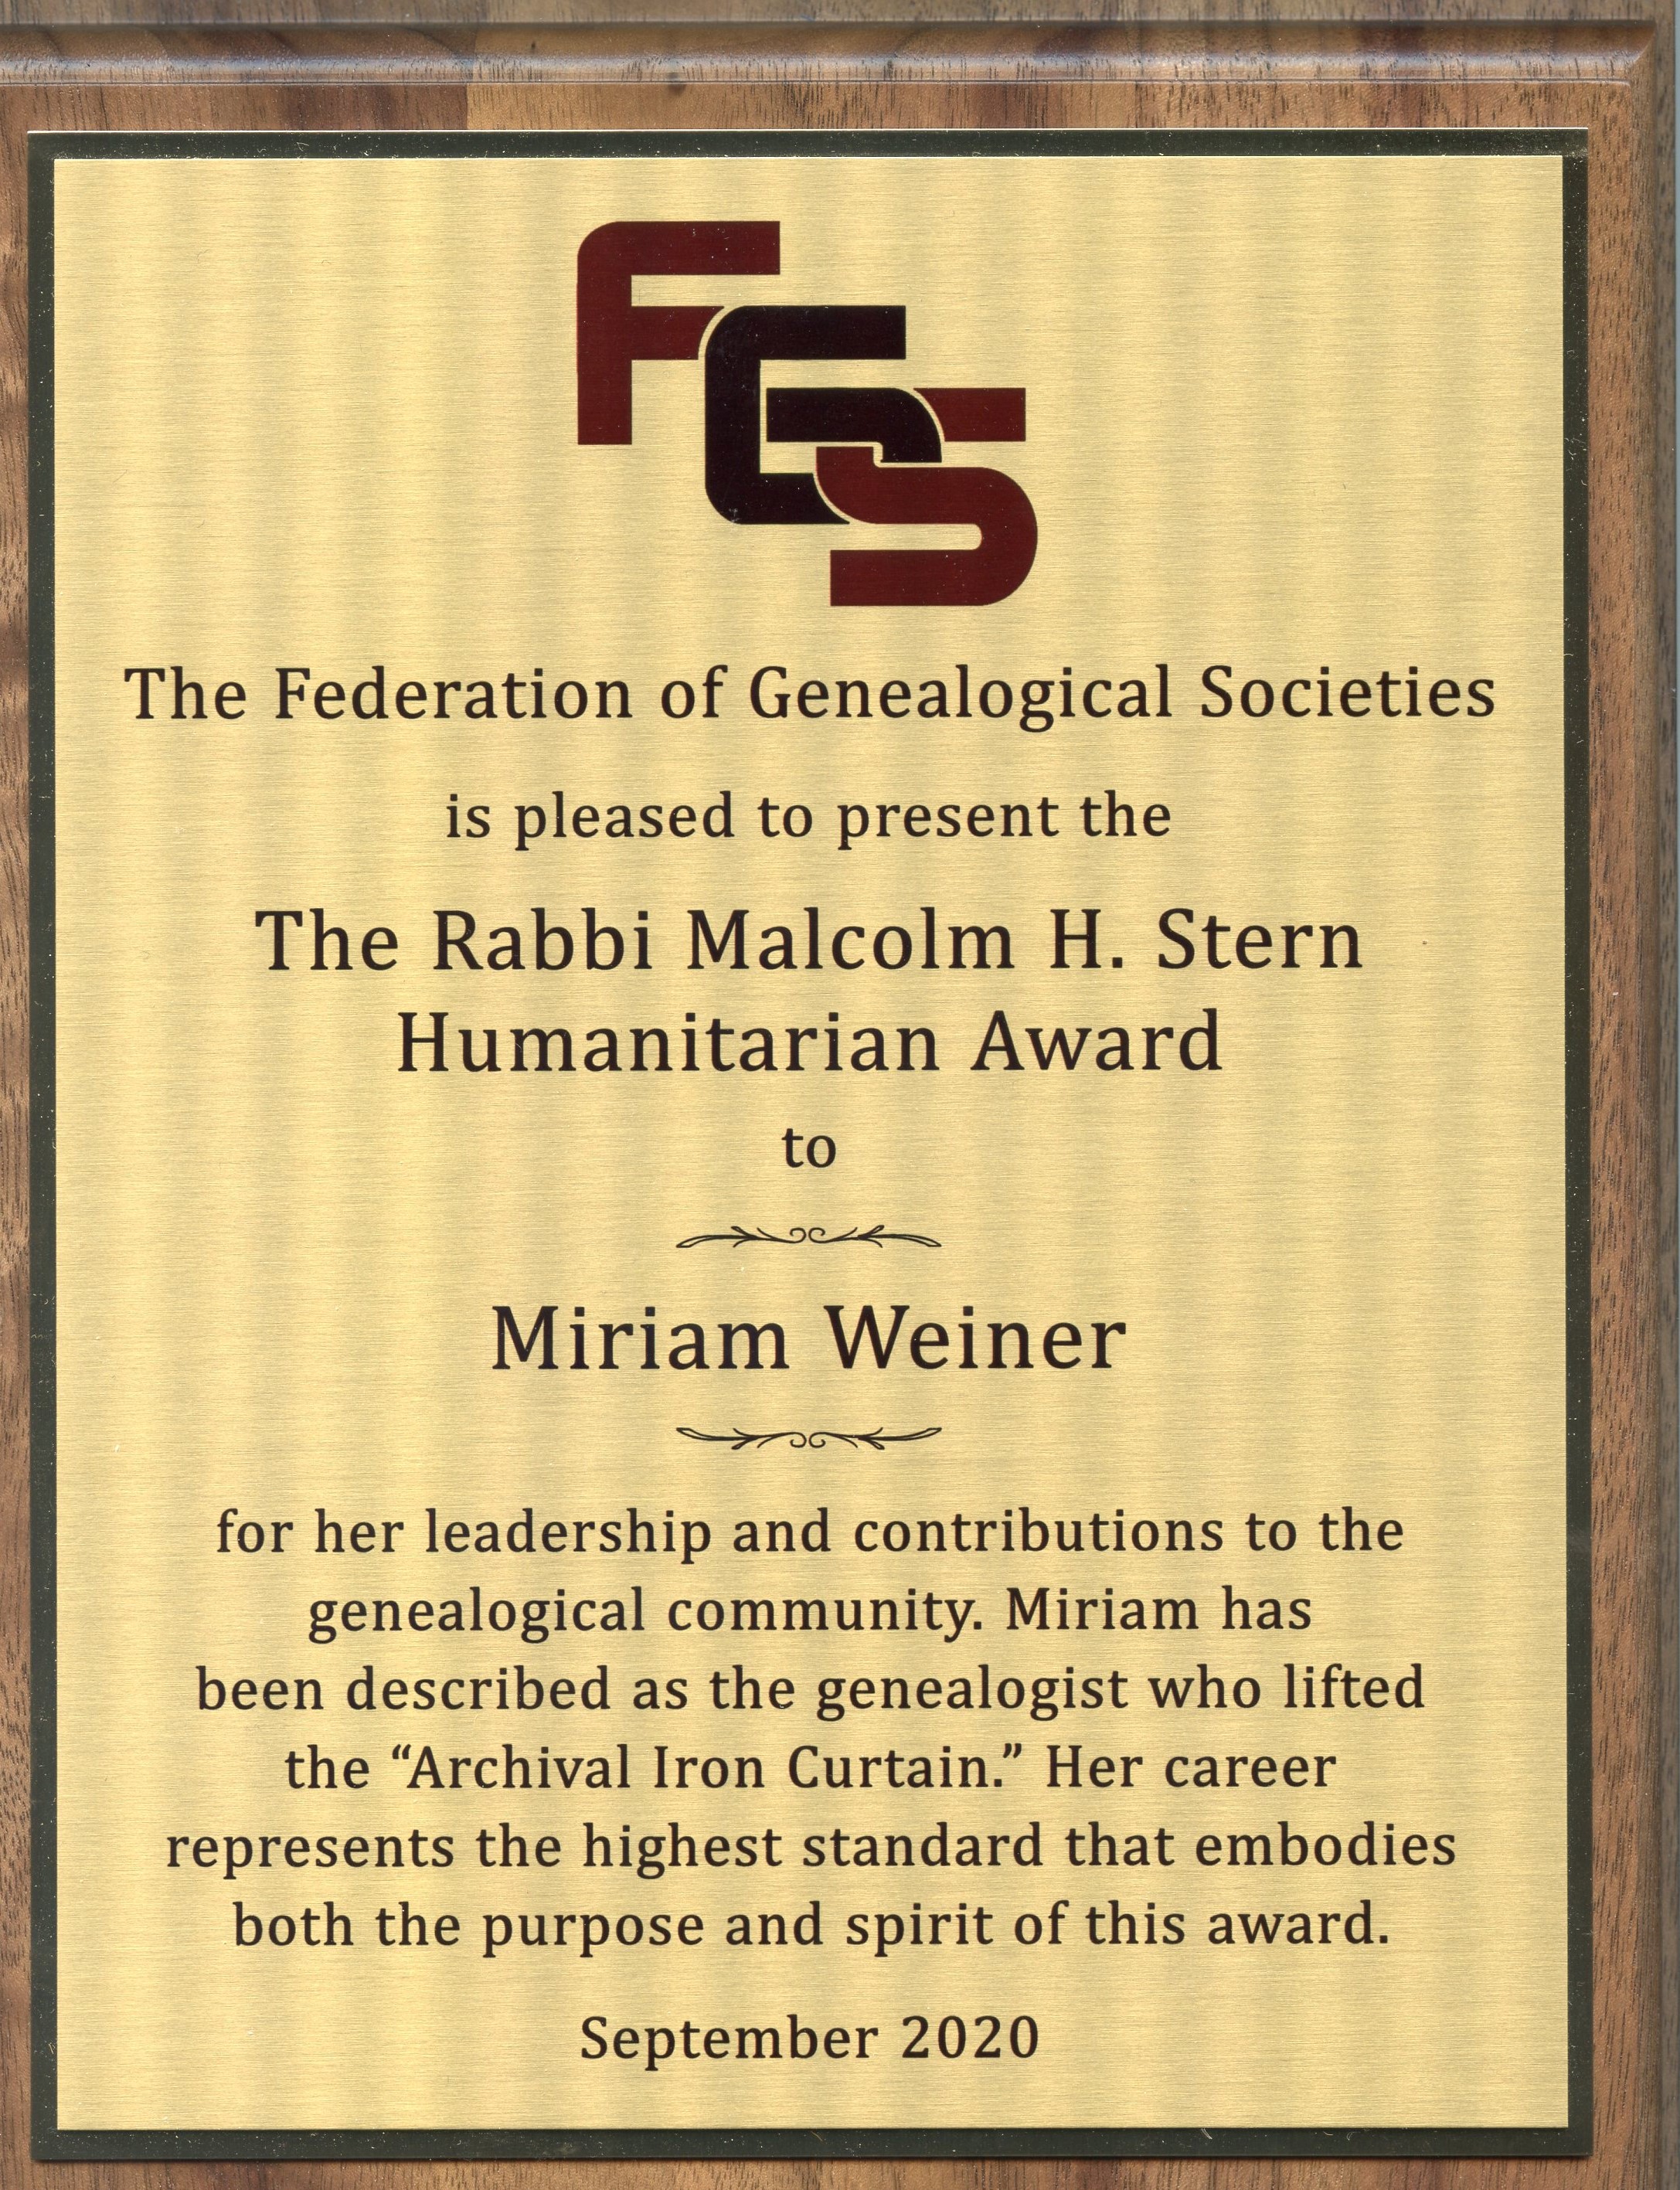 Federation of Genealogical Societies, 1991 (large)